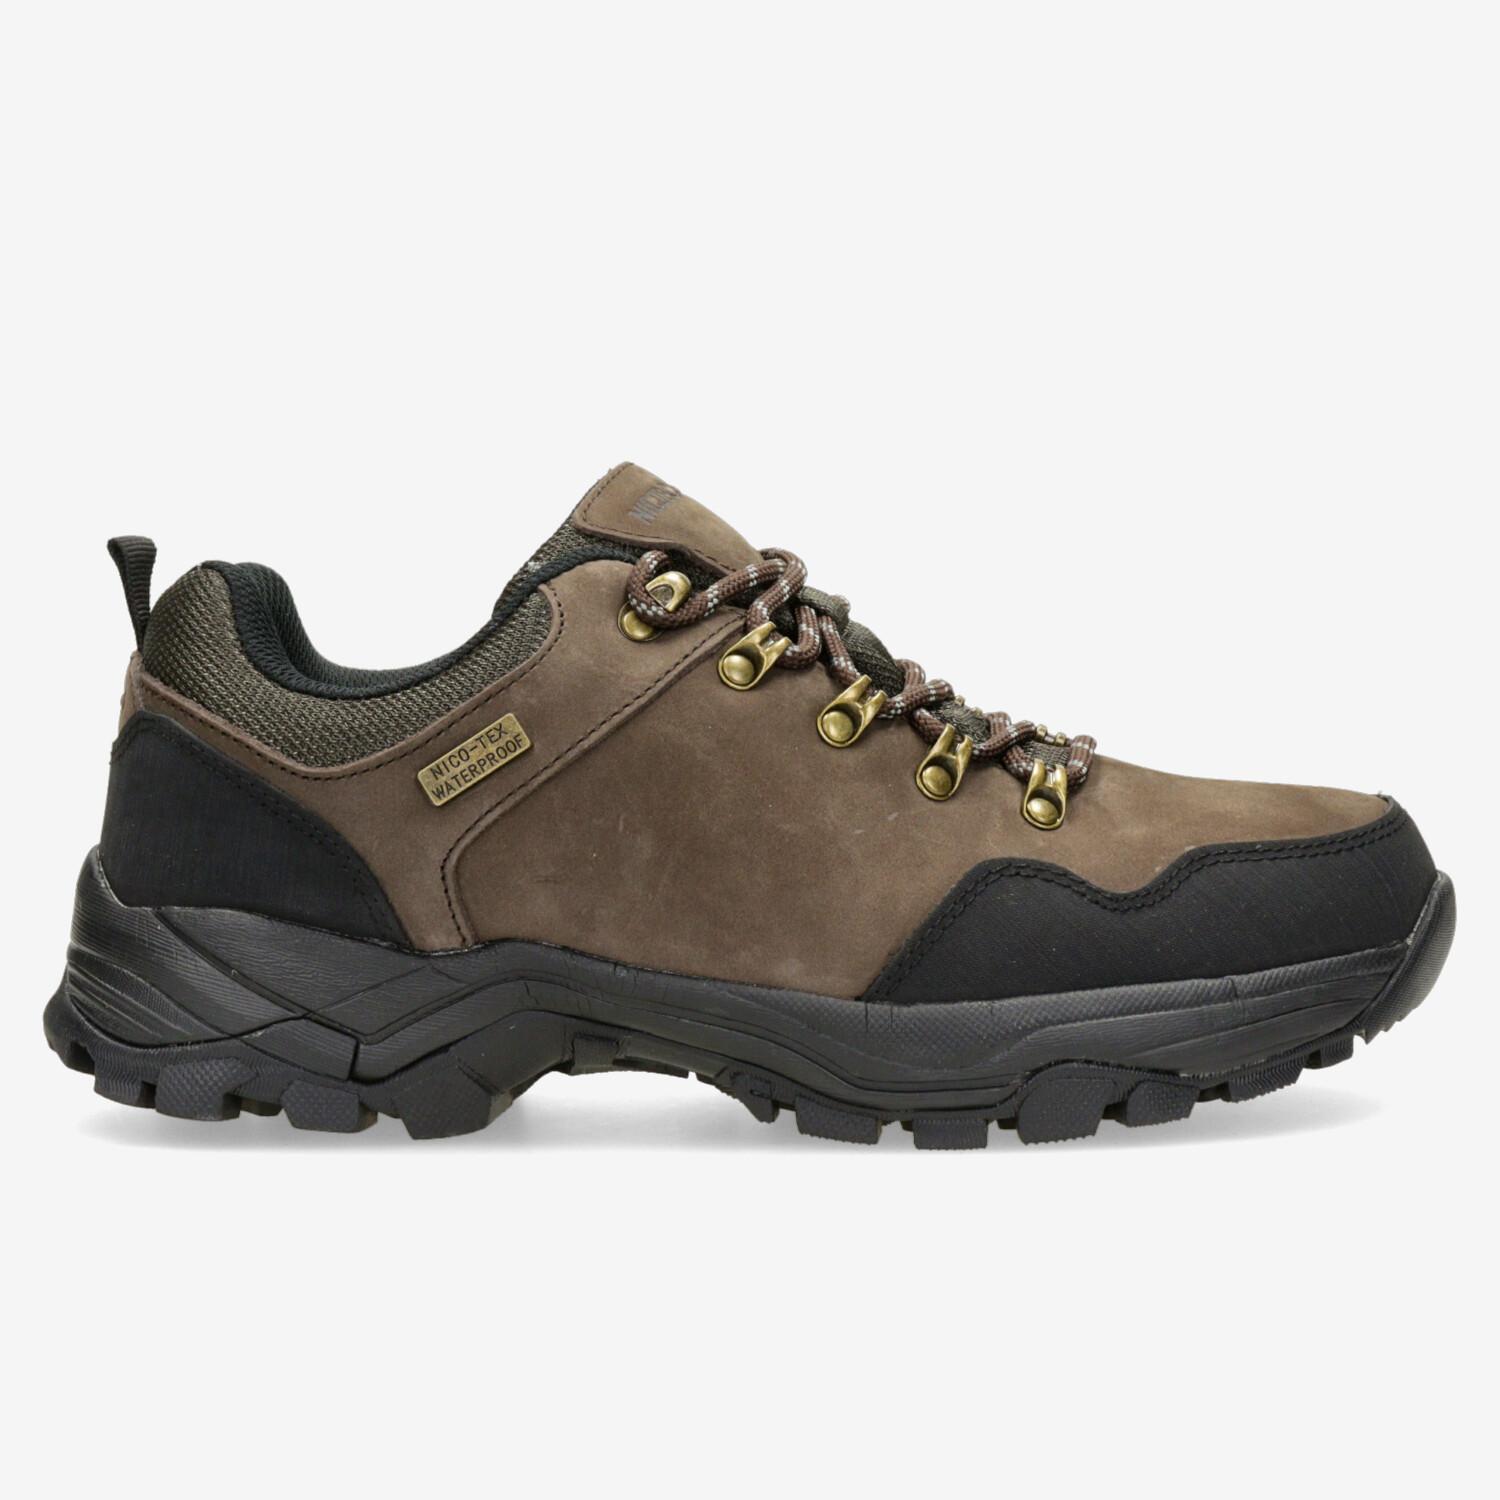 Nicoboco Tesco - Marron - Chaussures Trekking Homme sports taille 41